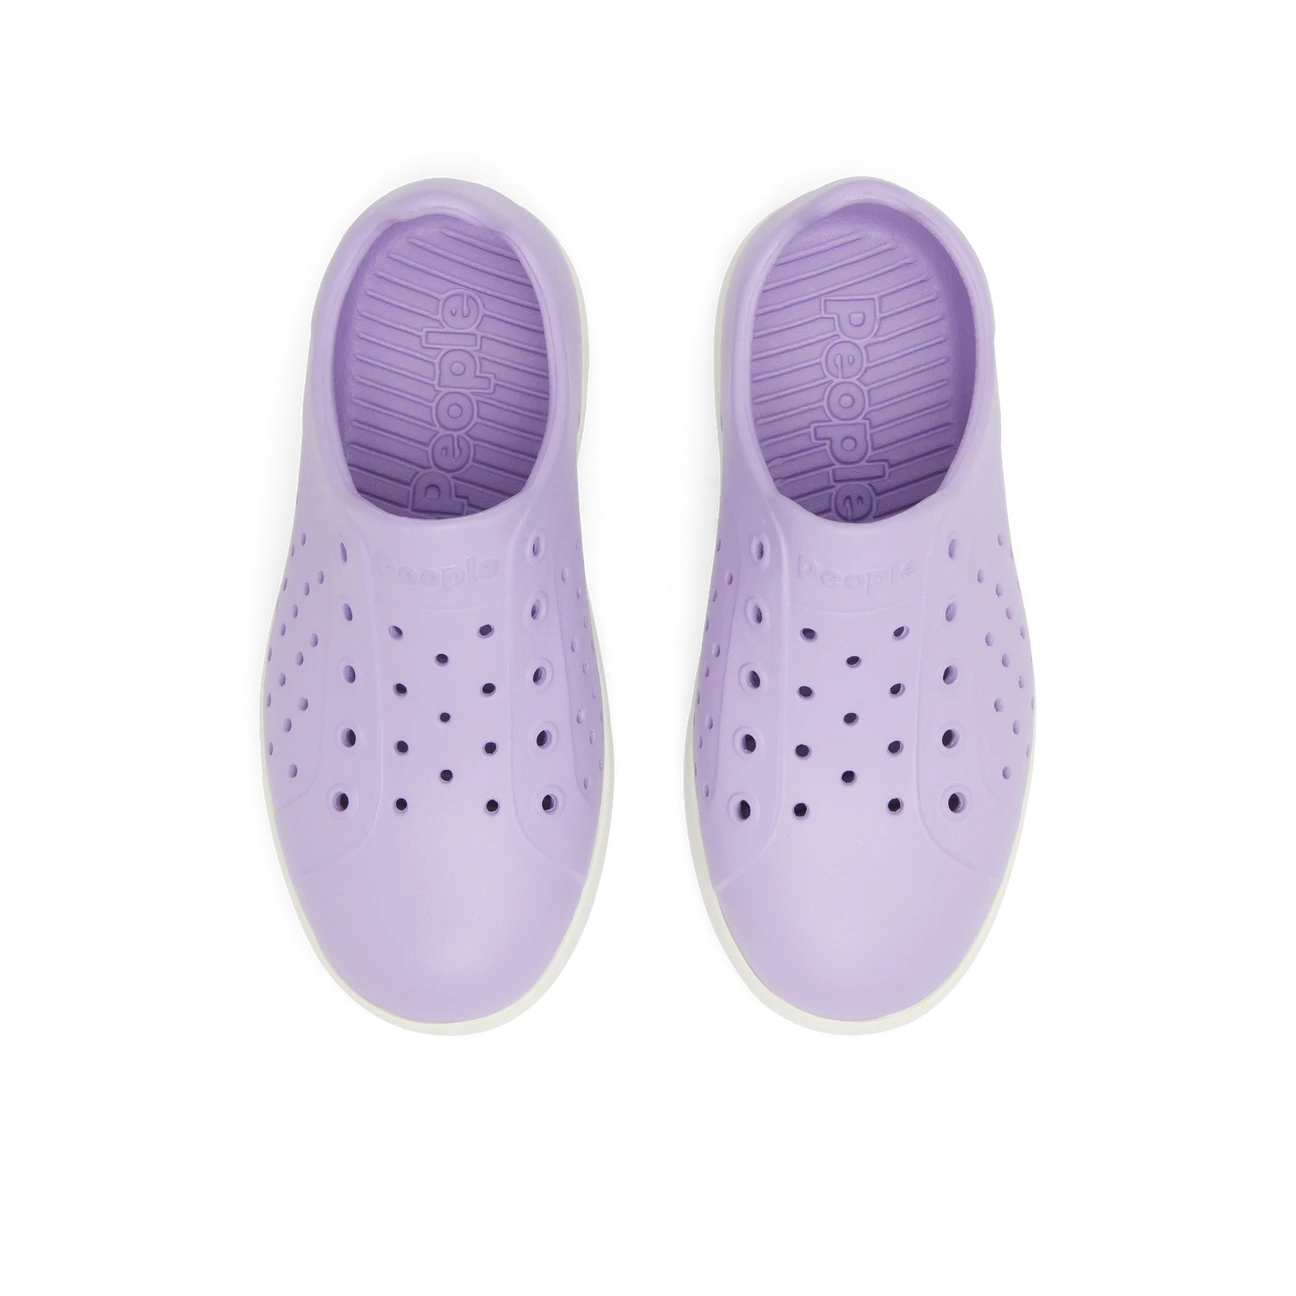 Ace Kids Shoes, Light Purple/Picket White